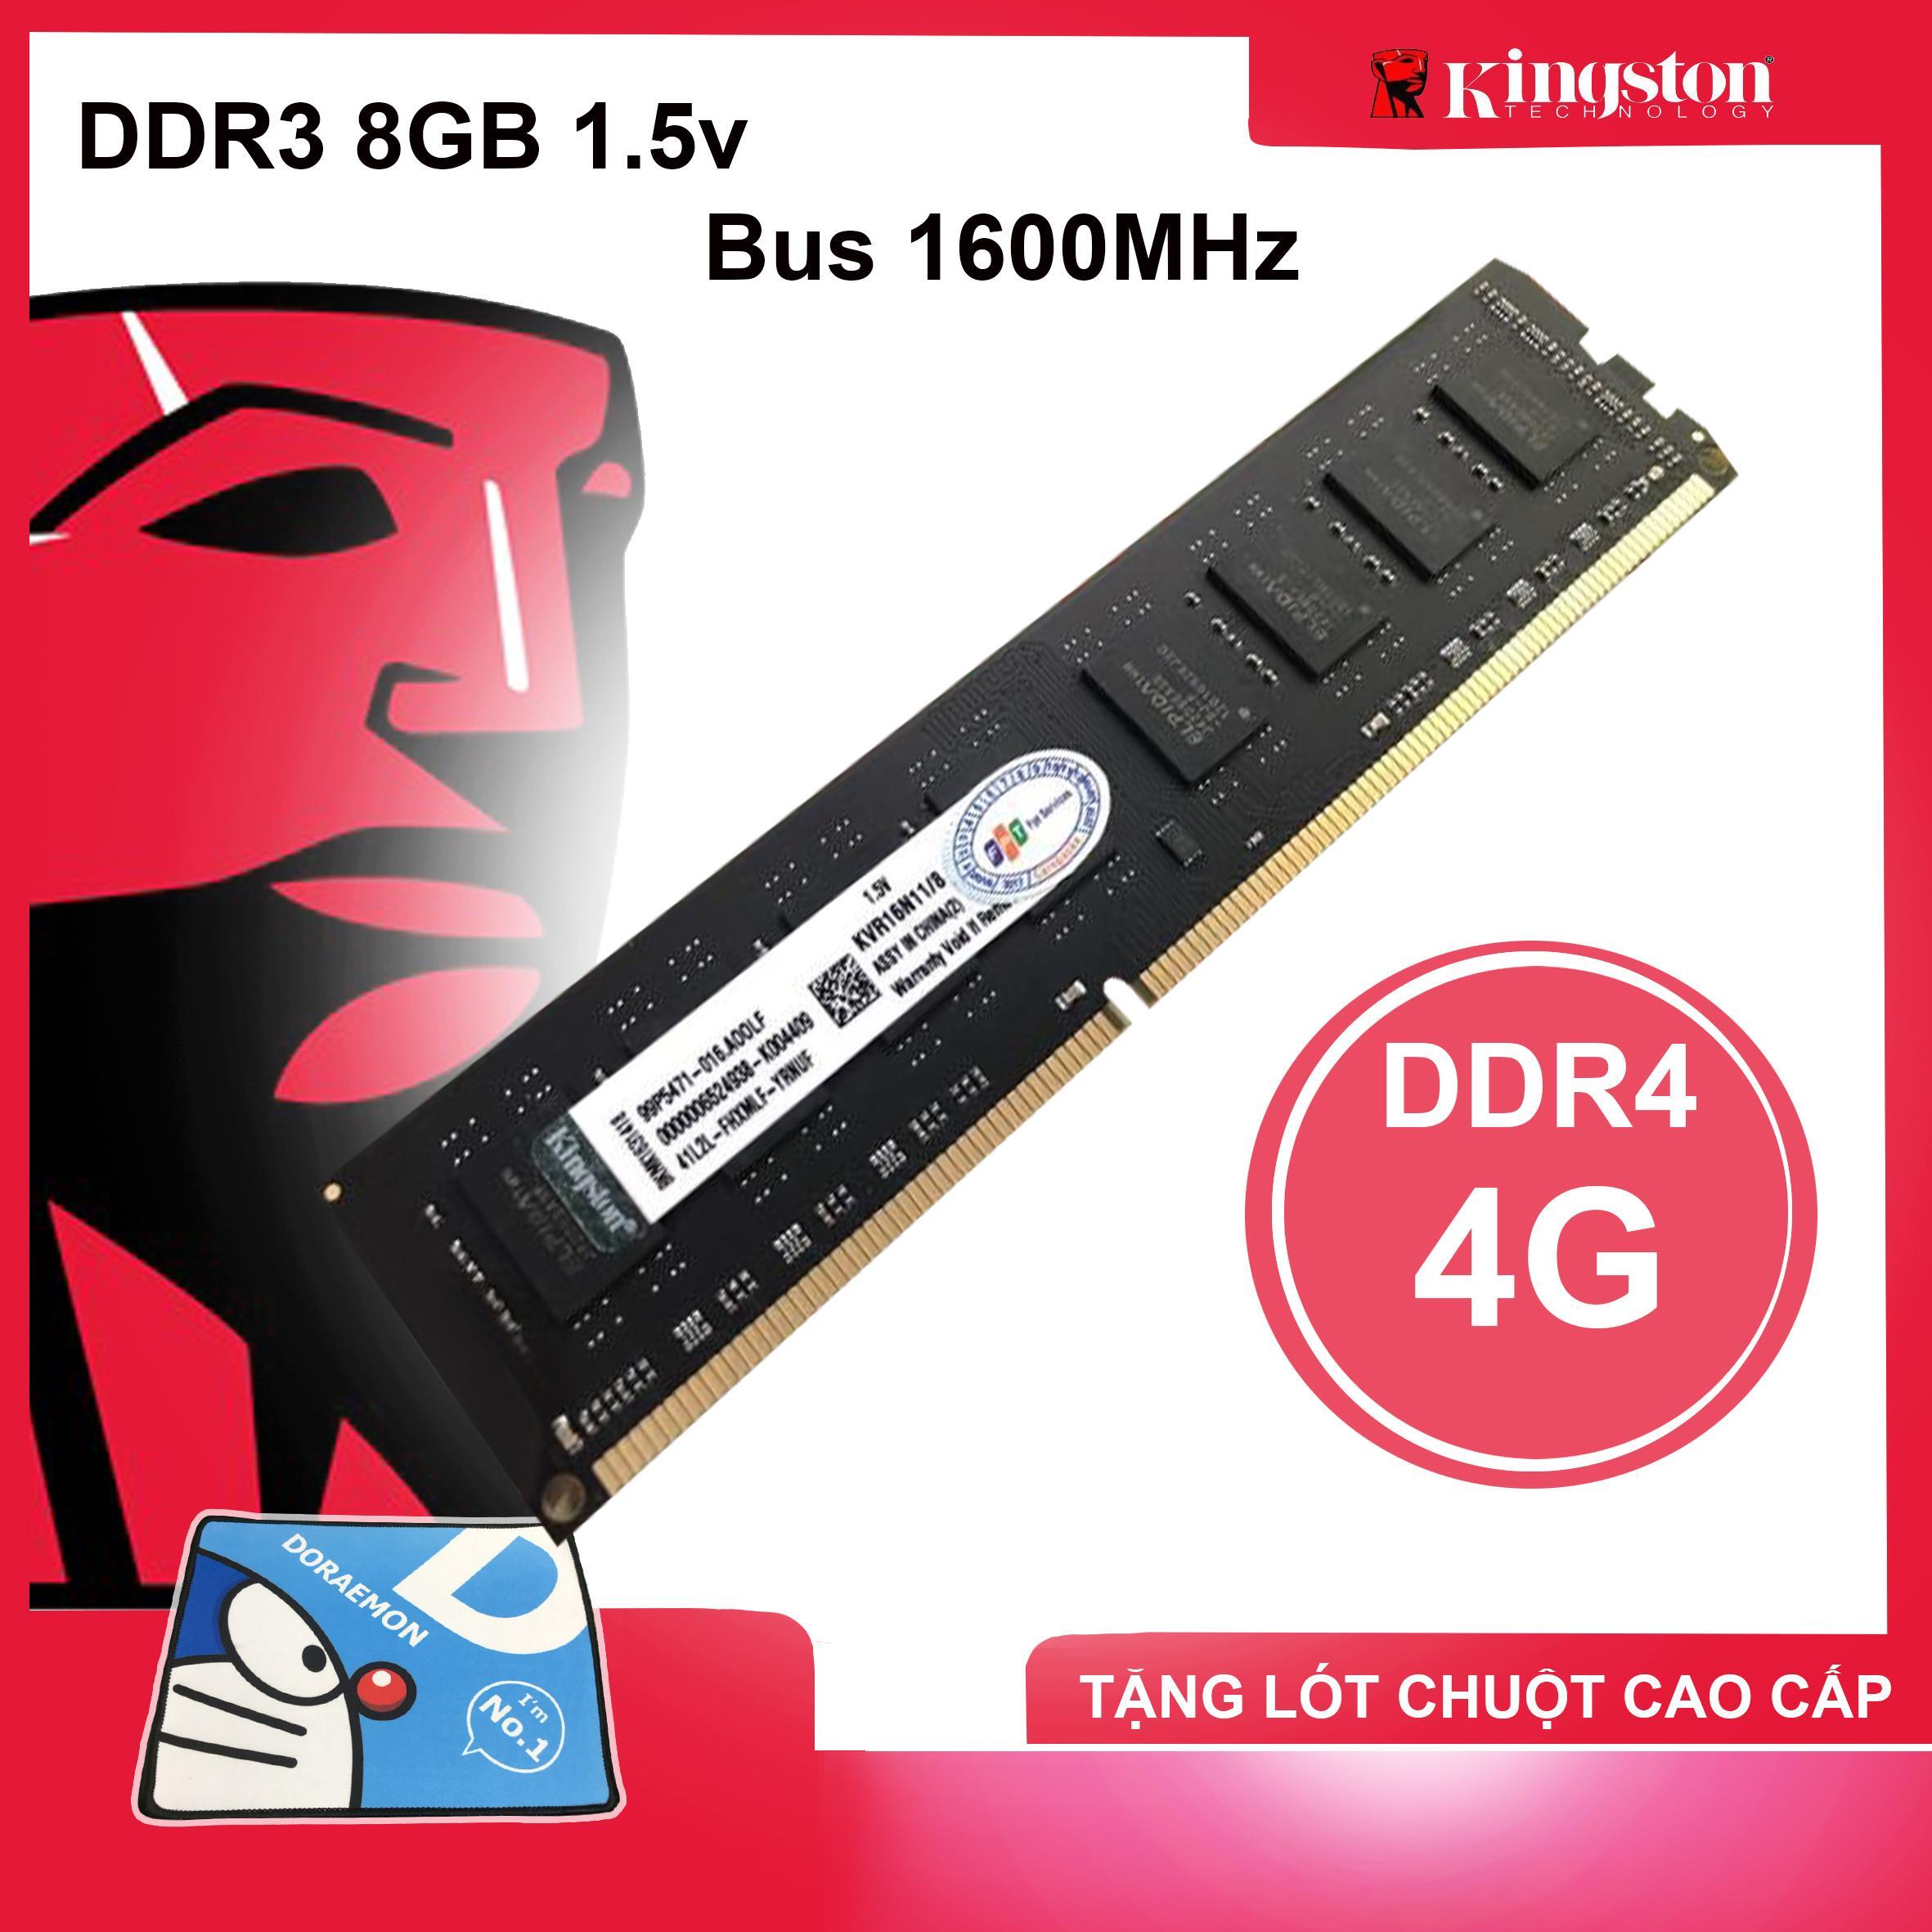 RAM Kingston DDR3 4GB (2x2GB) bus 1600MHz - PC3 12800 kit